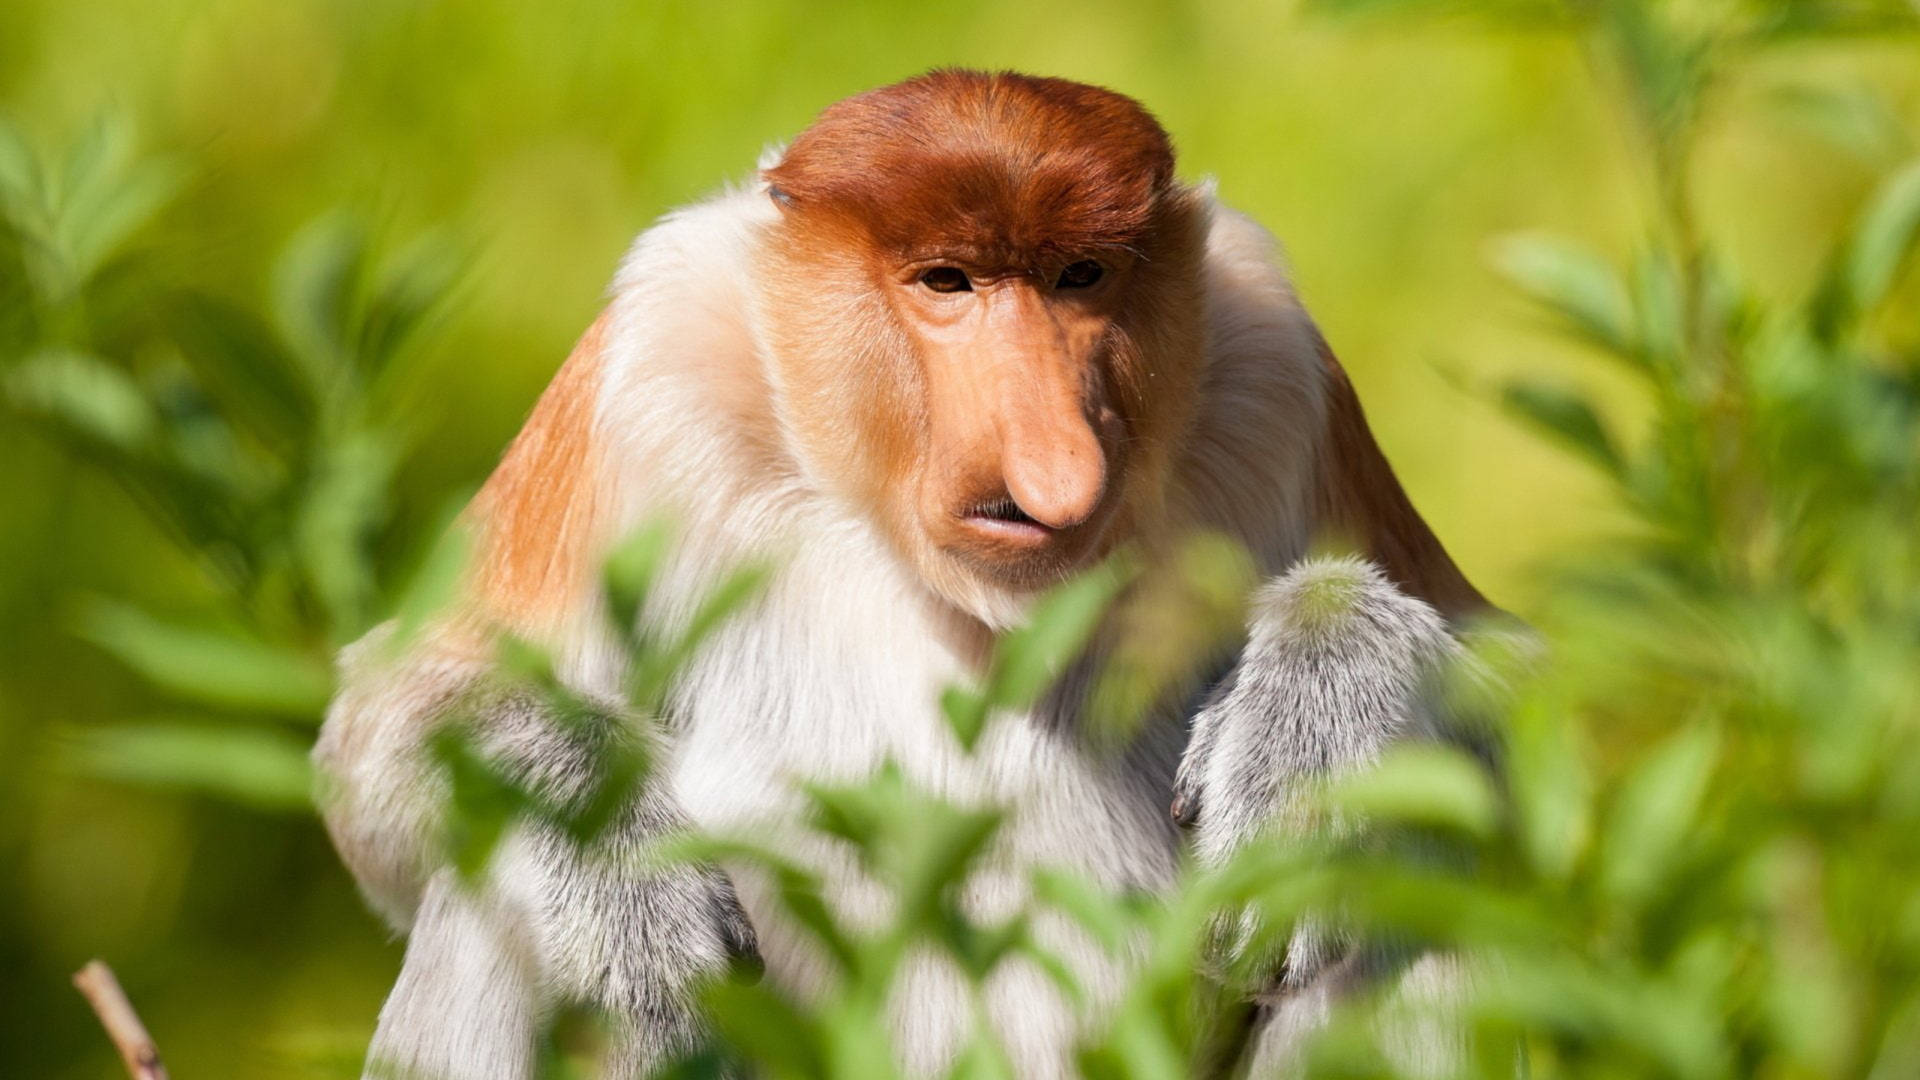 Majestic Proboscis Monkey In Its Natural Habitat Background